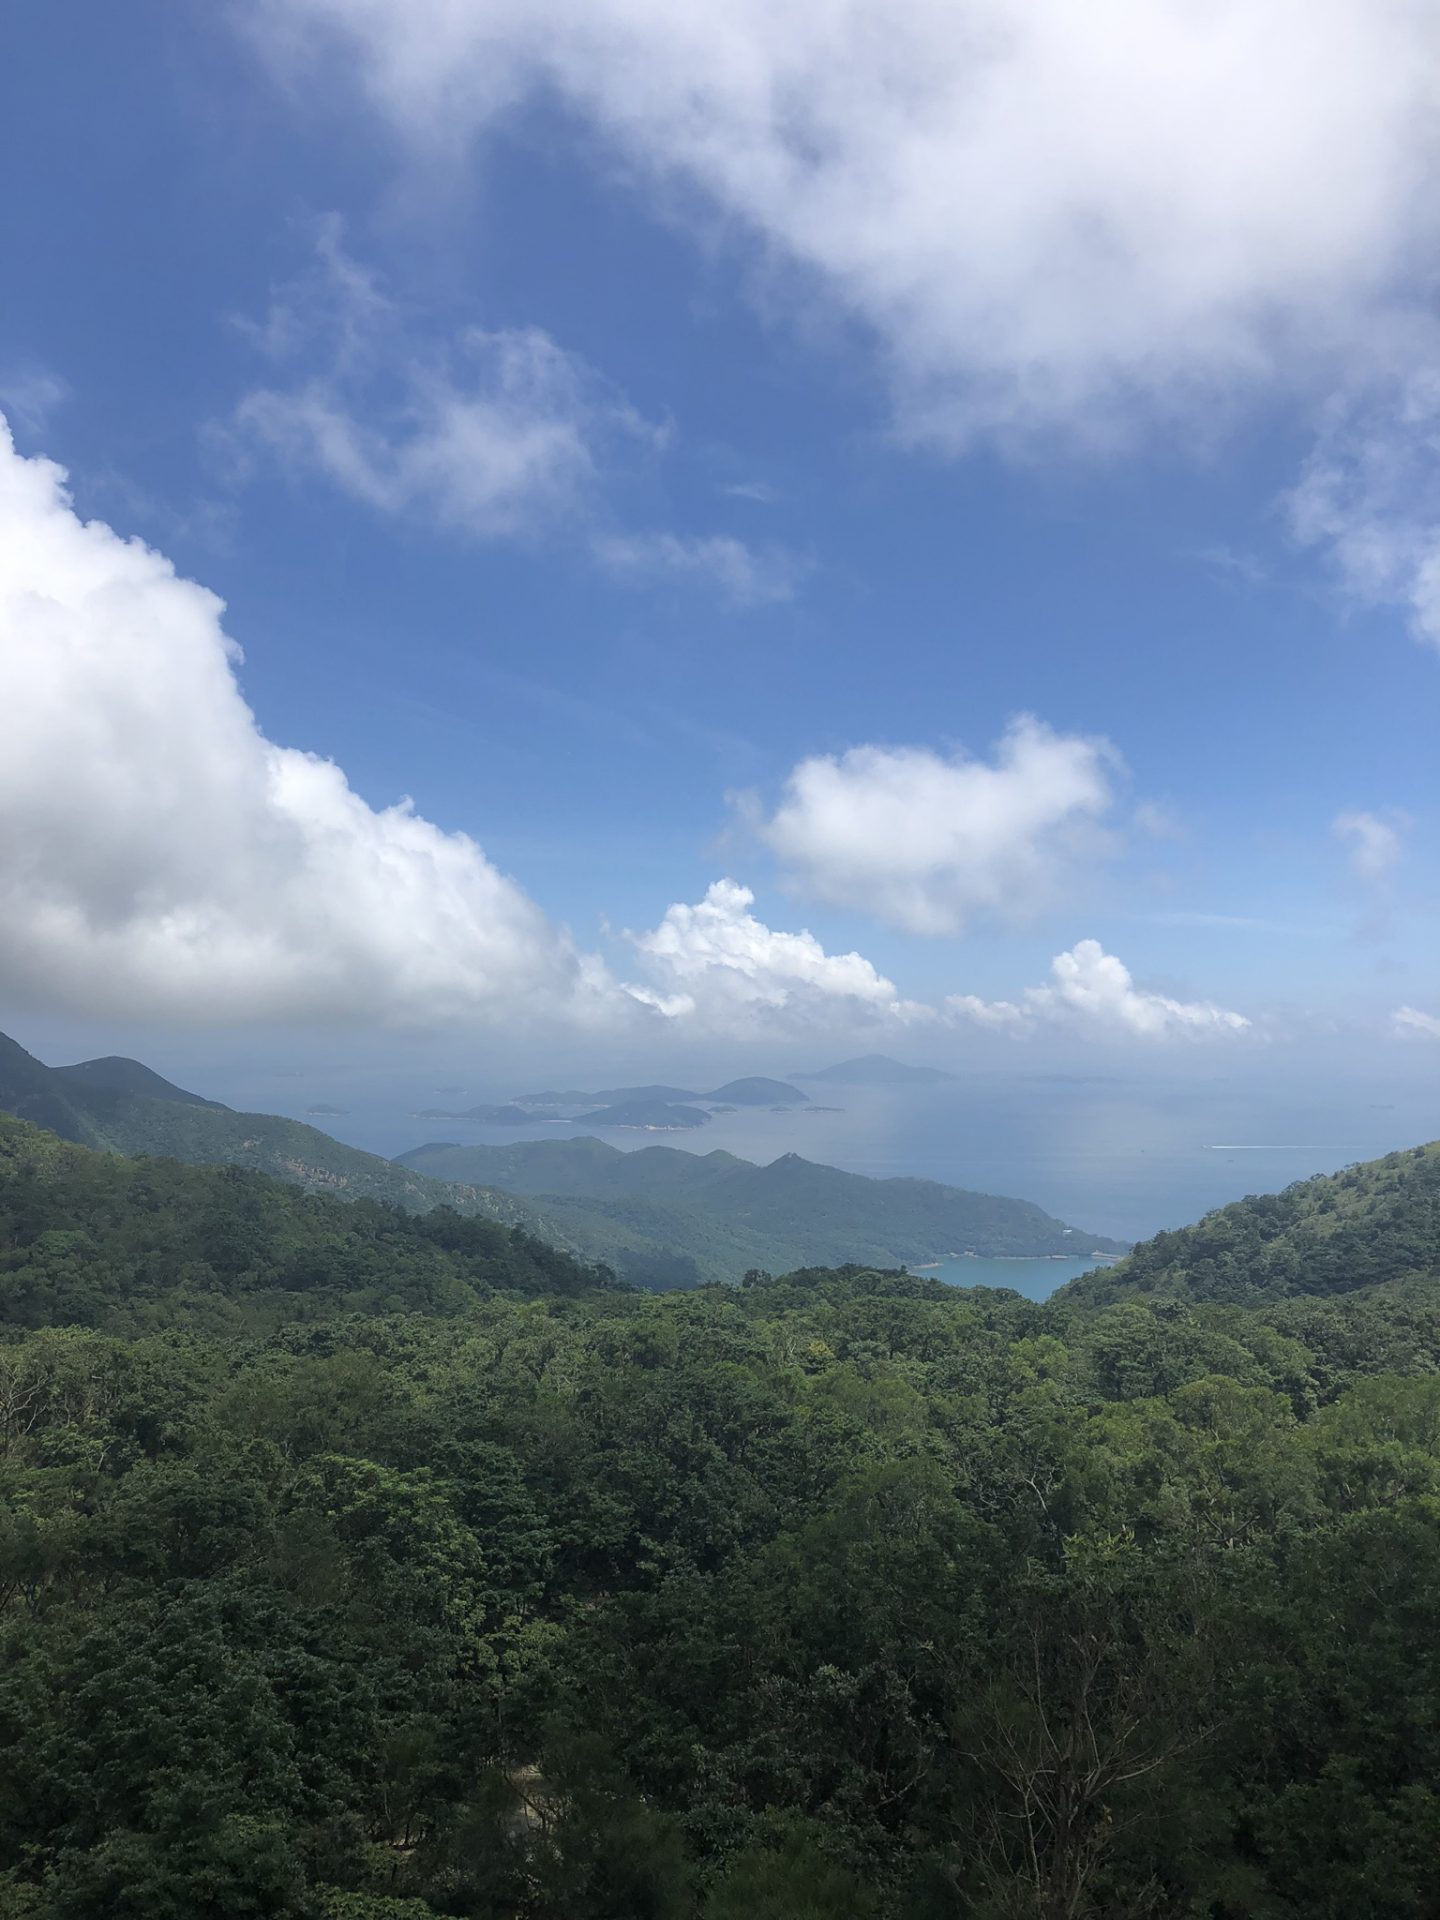 Views across Lantau Island from Tian Tan Buddha